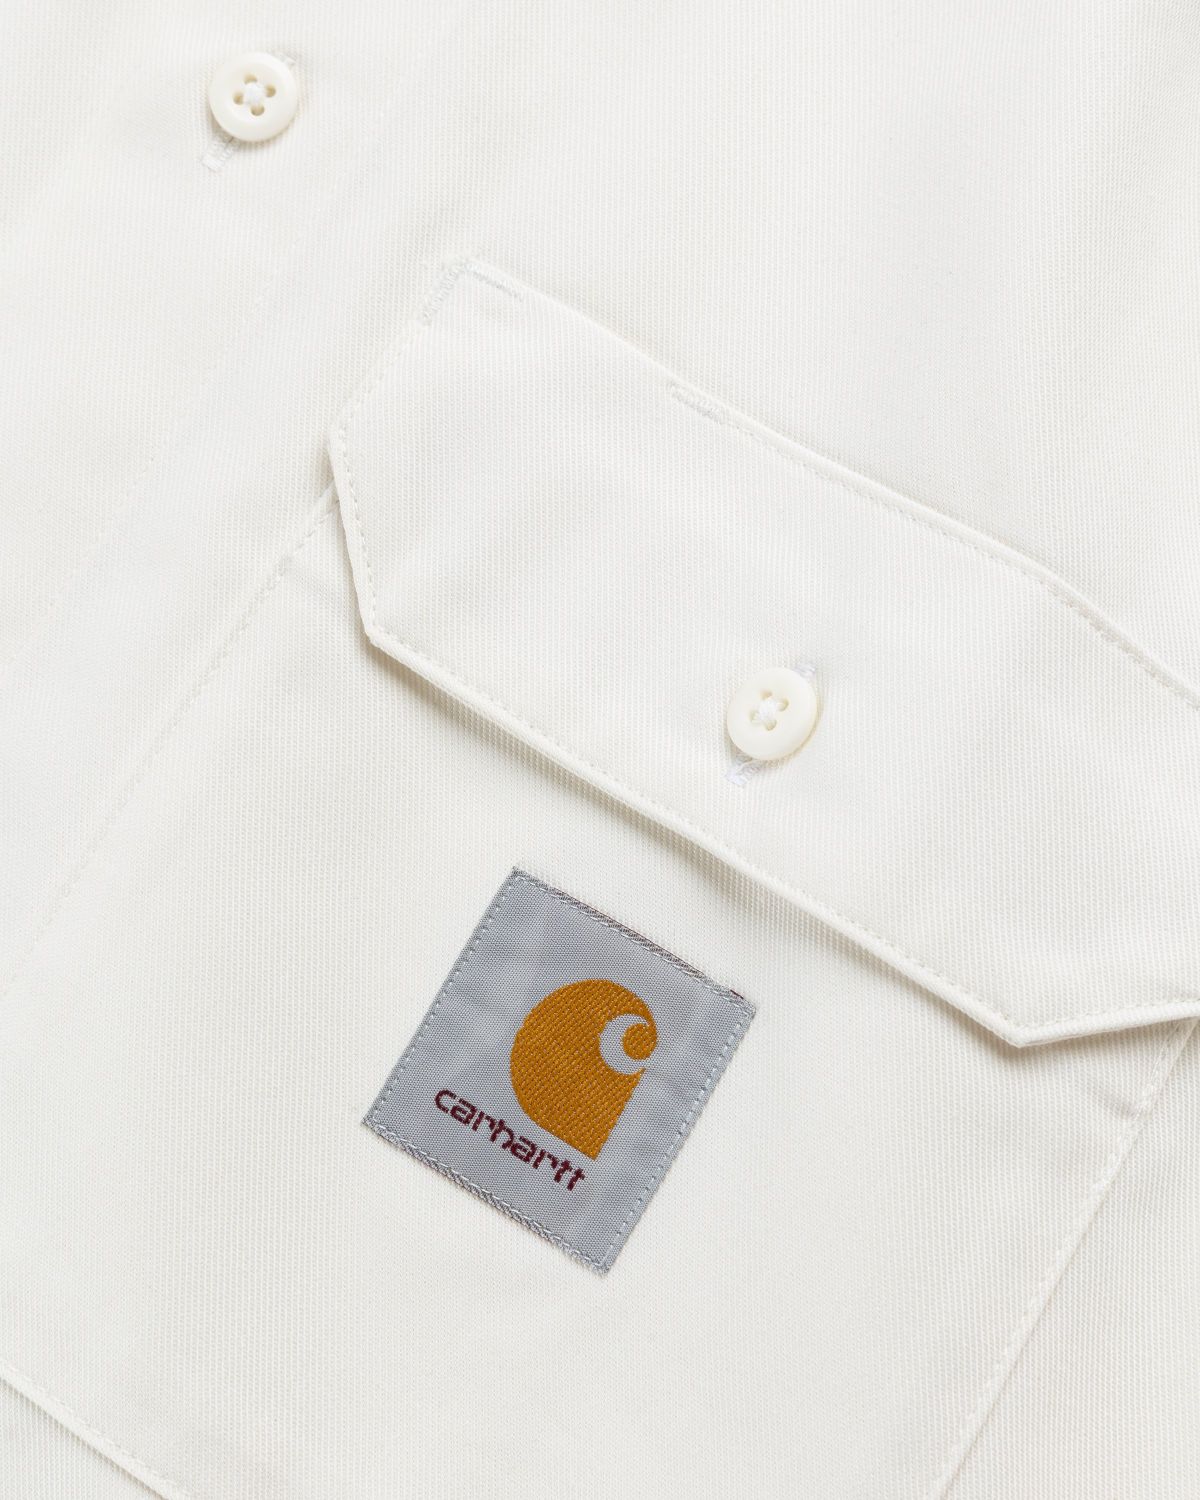 Carhartt WIP – Master Shirt Wax - Shortsleeve Shirts - White - Image 6